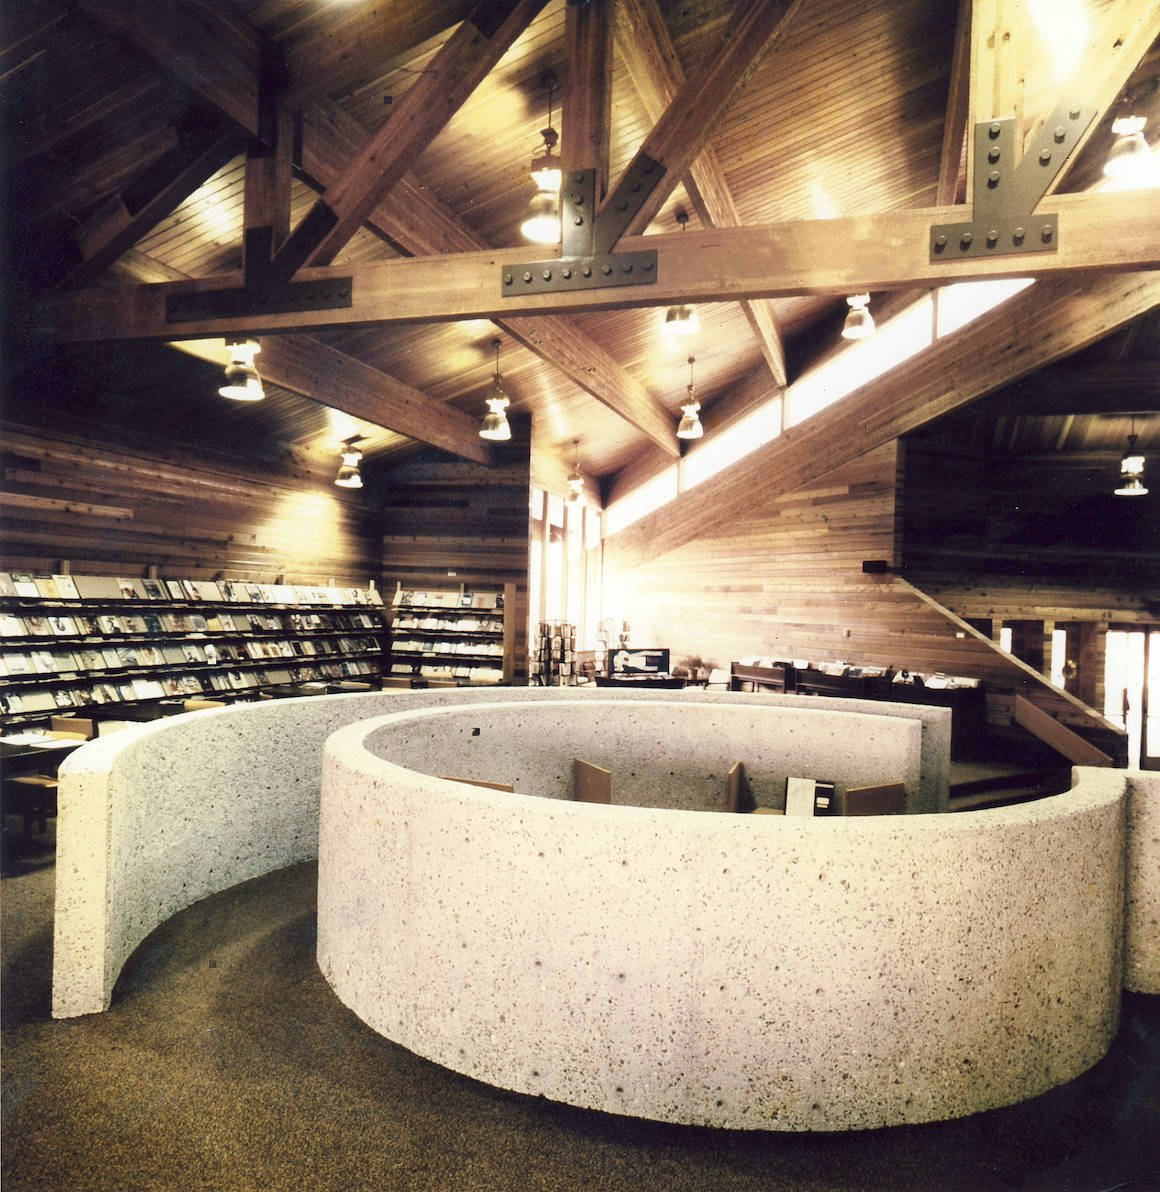 University Park Library, Irvine